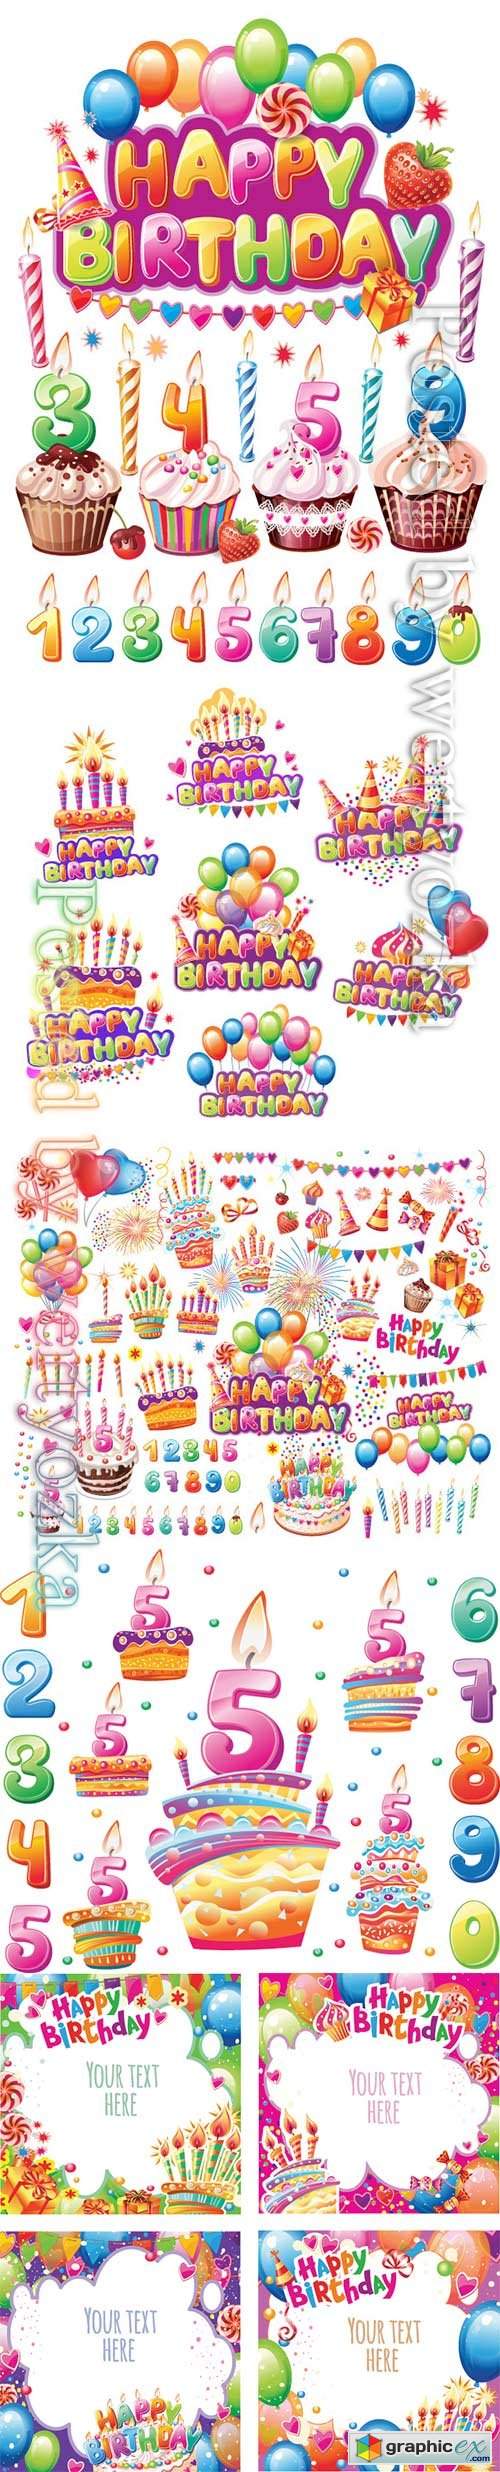  Birthday party set vector elements 